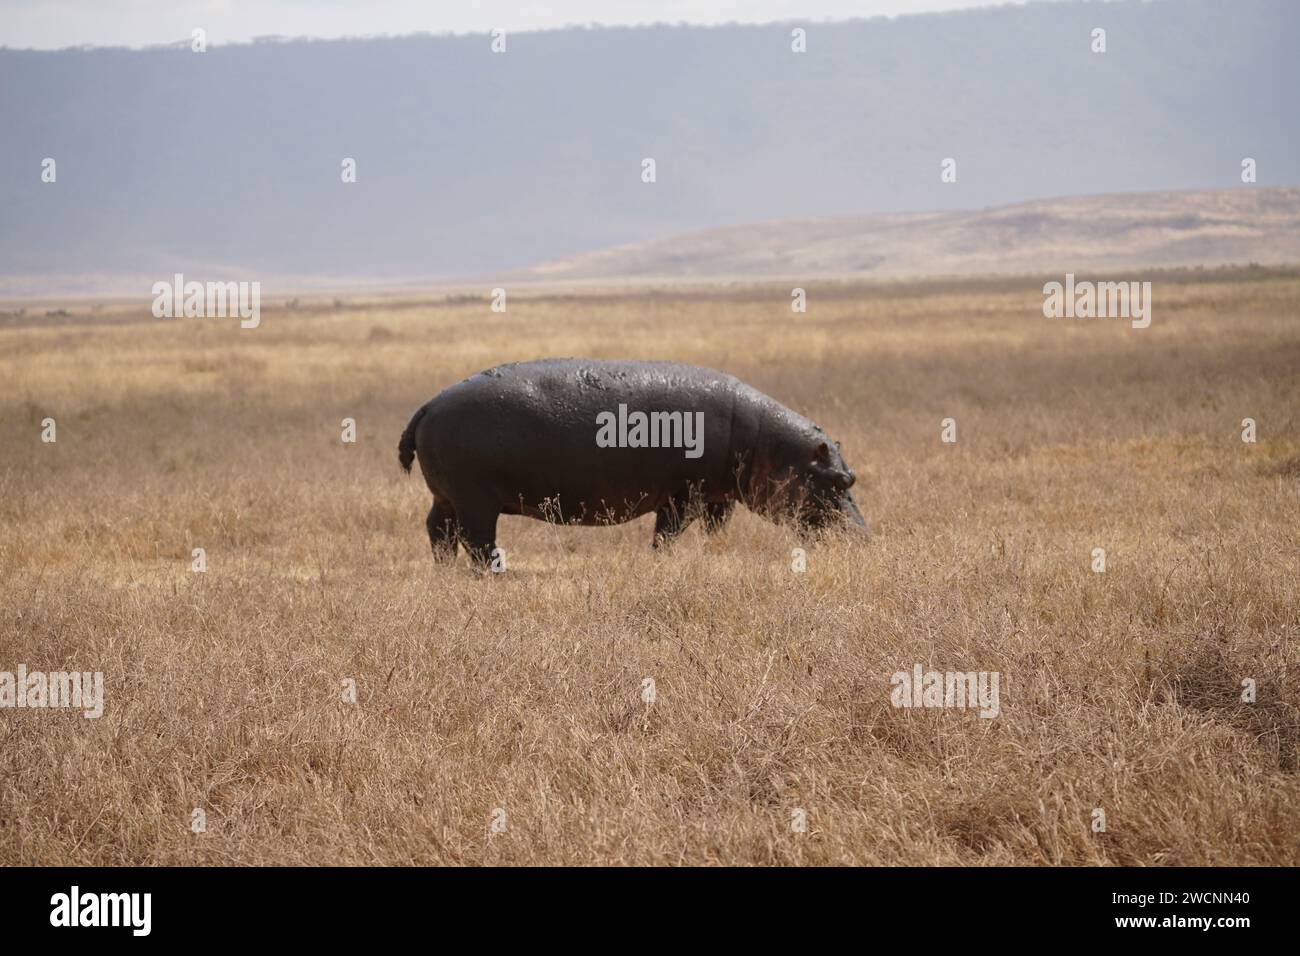 hippo on grassland, full body, side view Stock Photo